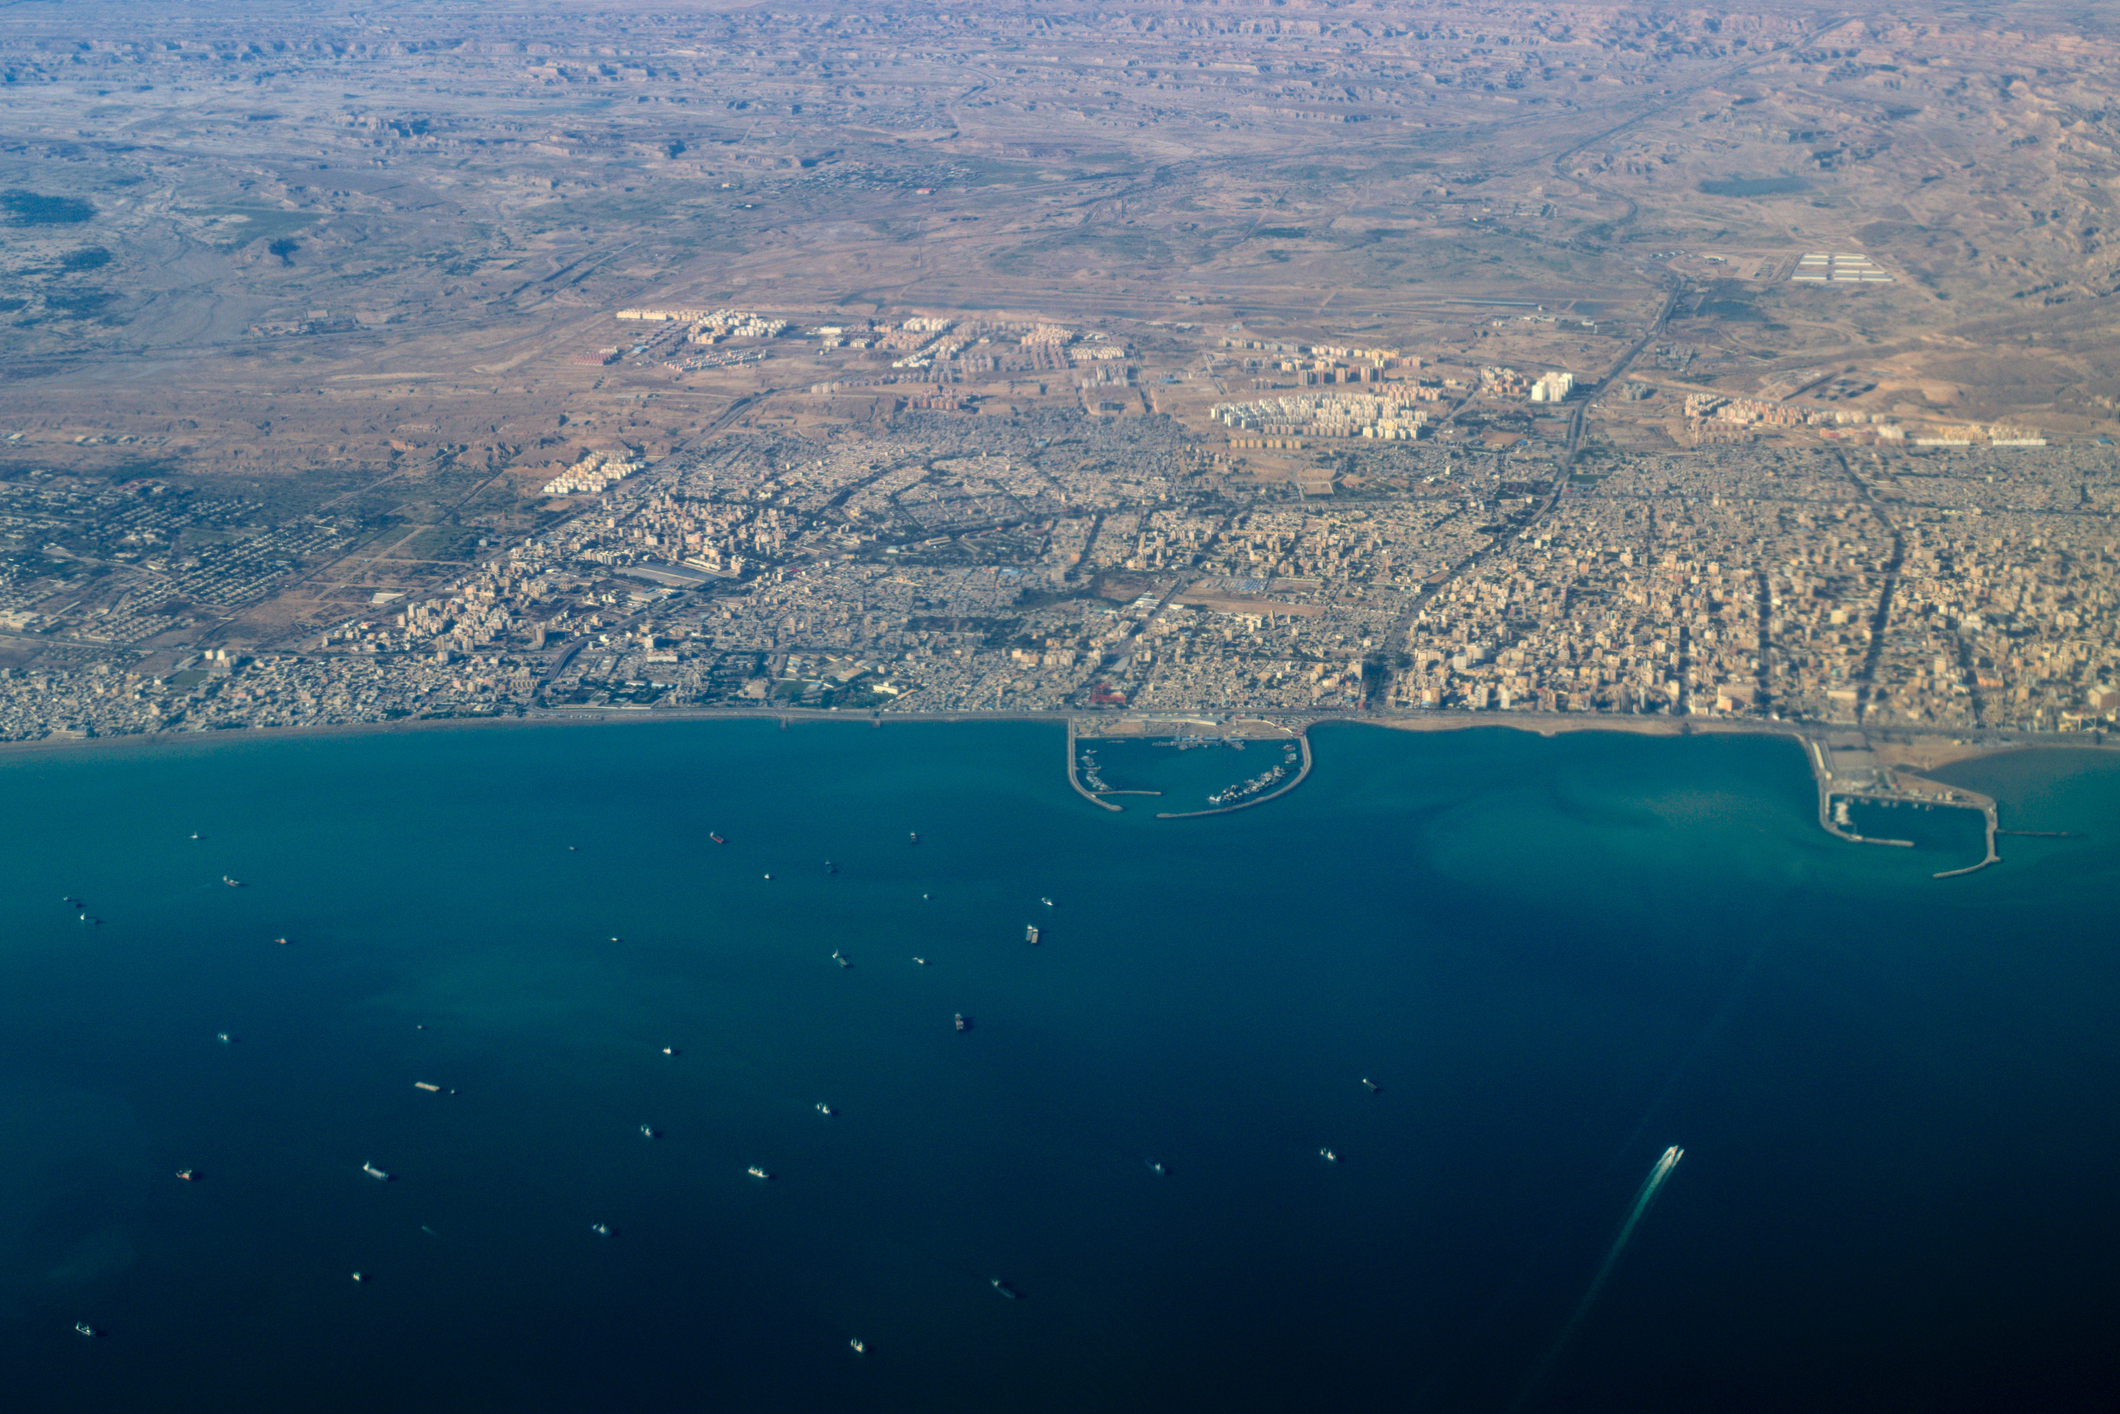 Aerial view of Bandar Abbas major Iranian Persian Gulf port city with several harbors and ship traffic, Strait of Hormuz, Iran